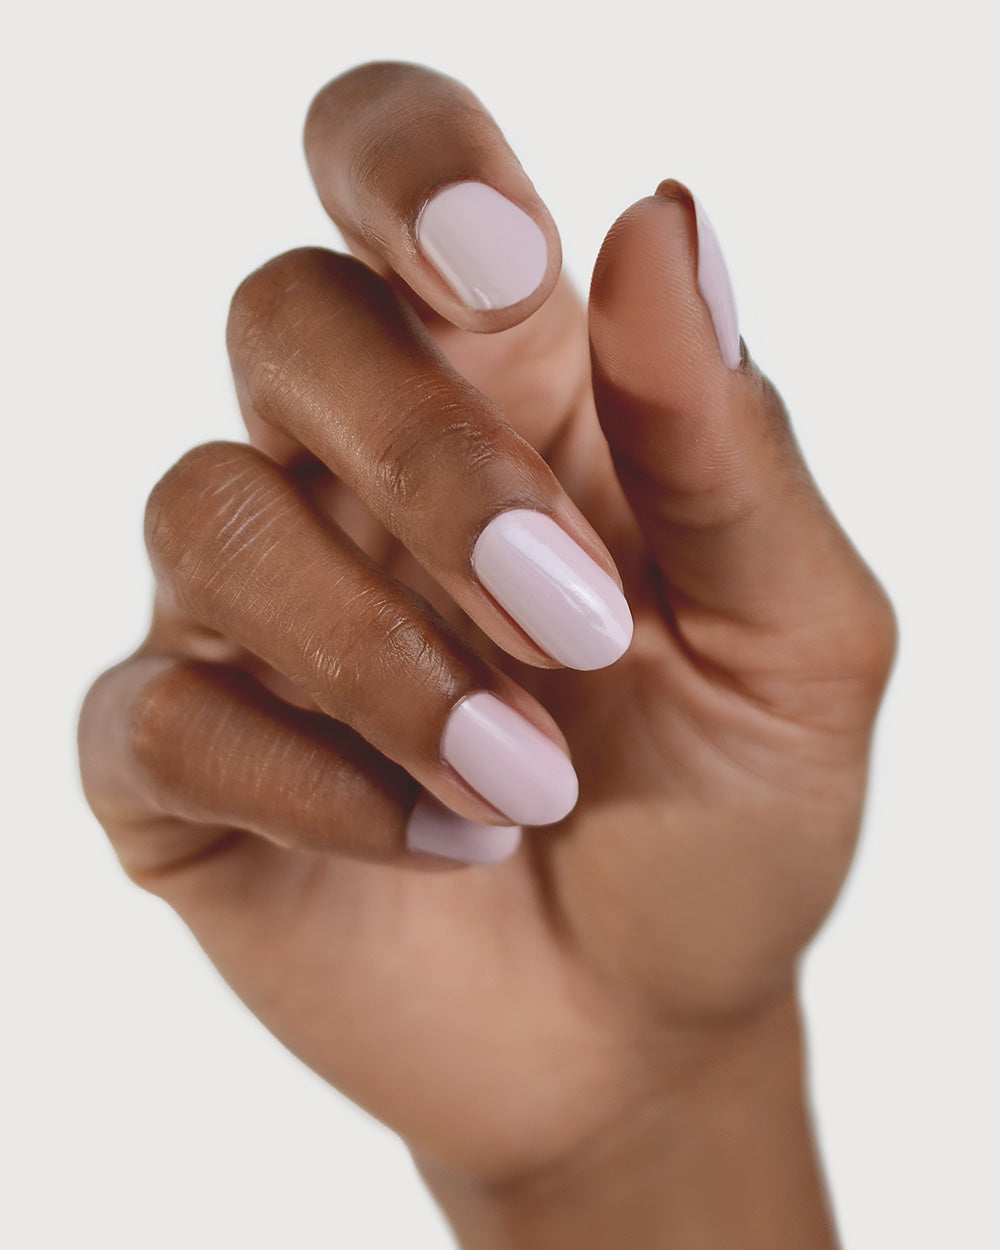 Tranquility Light Mauve Rose Crème nail polish by Sienna Byron Bay on medium skin tone hand.